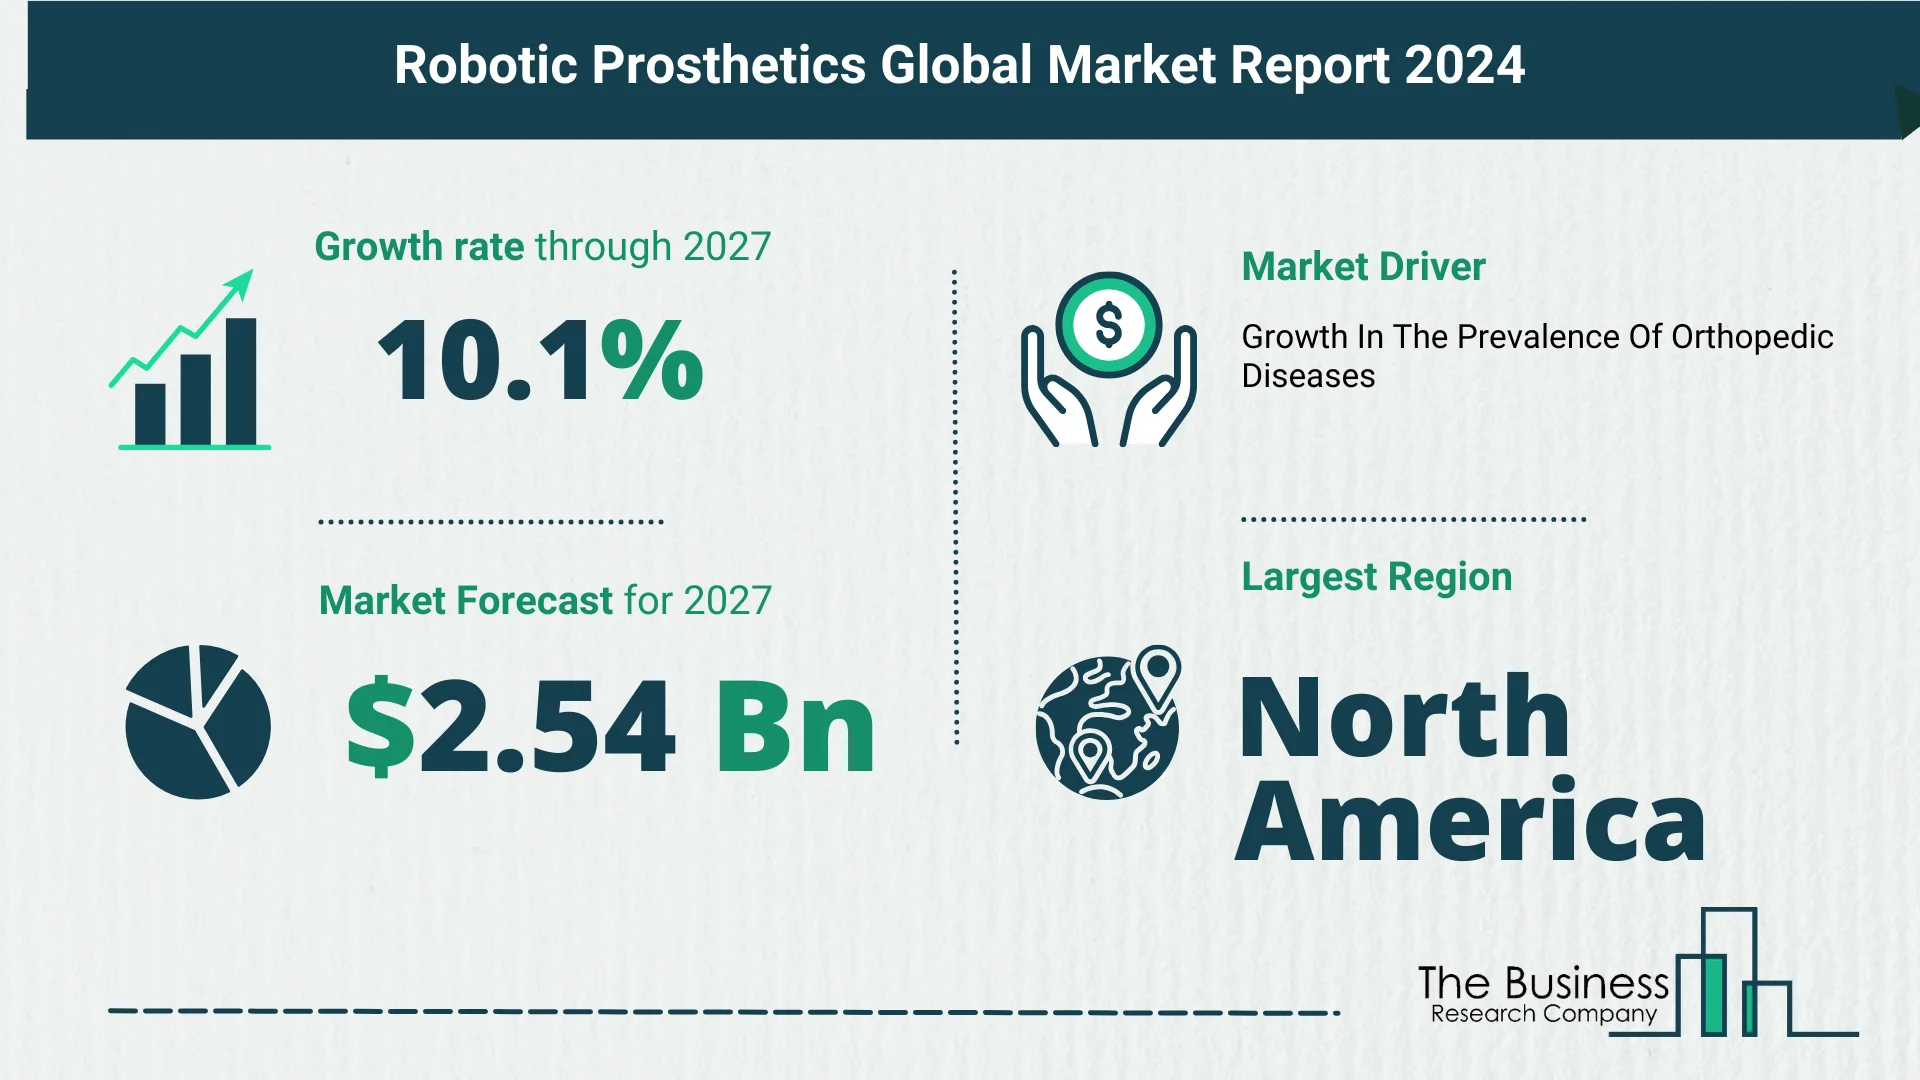 Global Robotic Prosthetics Market